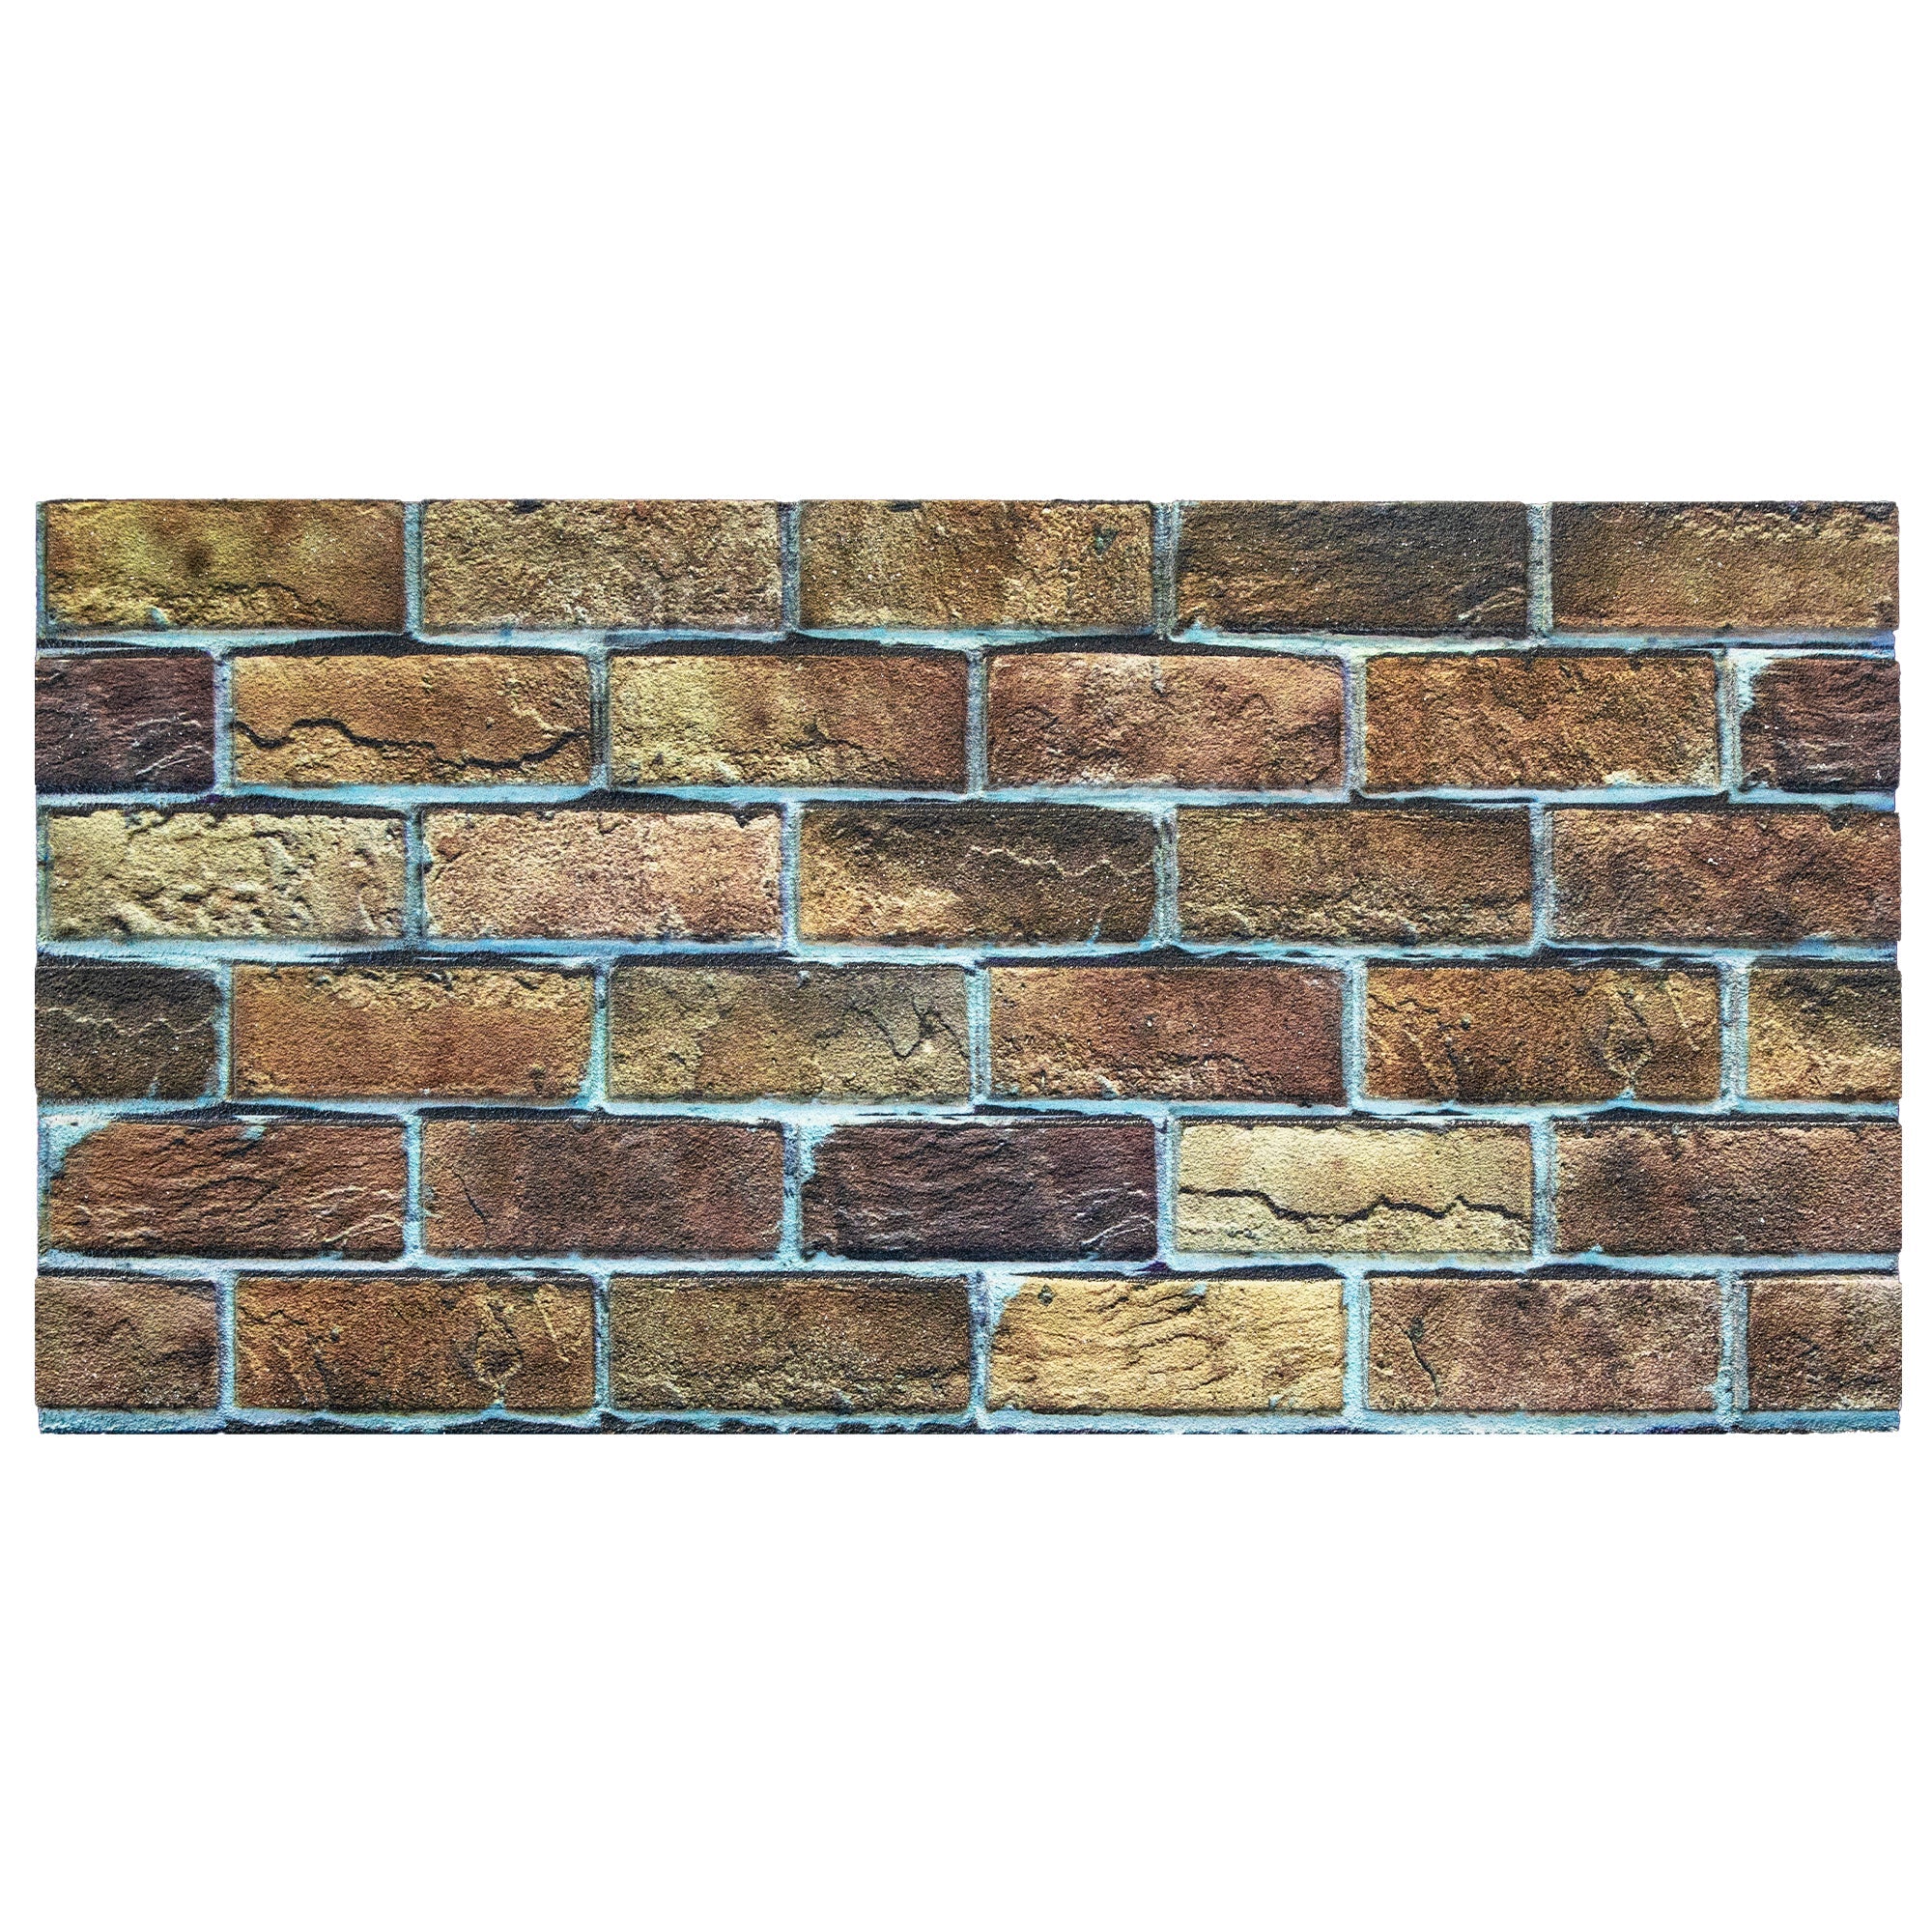 IZODEKOR Brick Stone Wall Panels